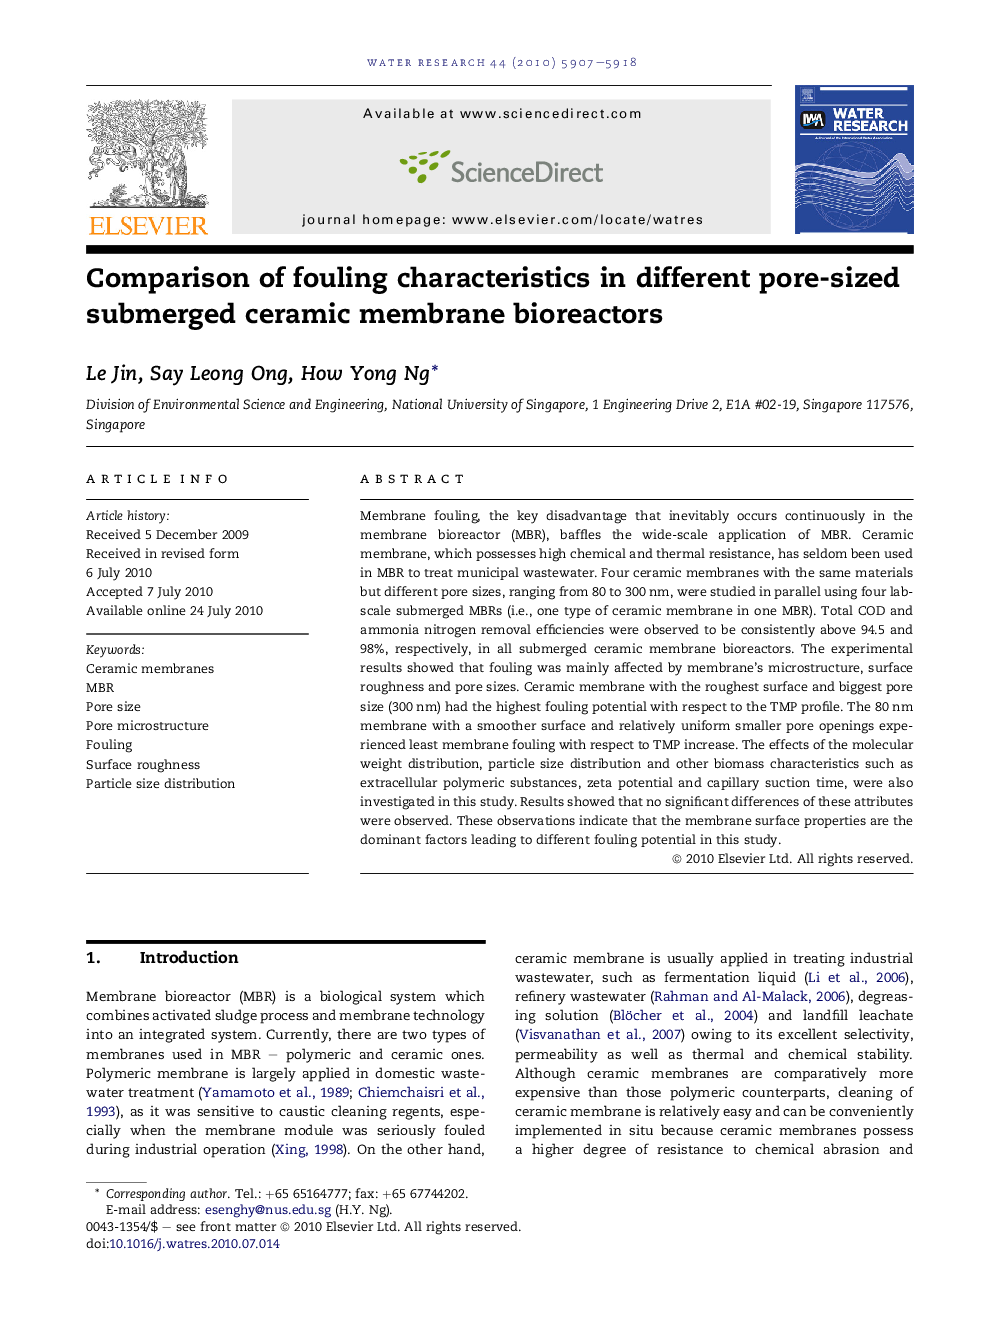 Comparison of fouling characteristics in different pore-sized submerged ceramic membrane bioreactors